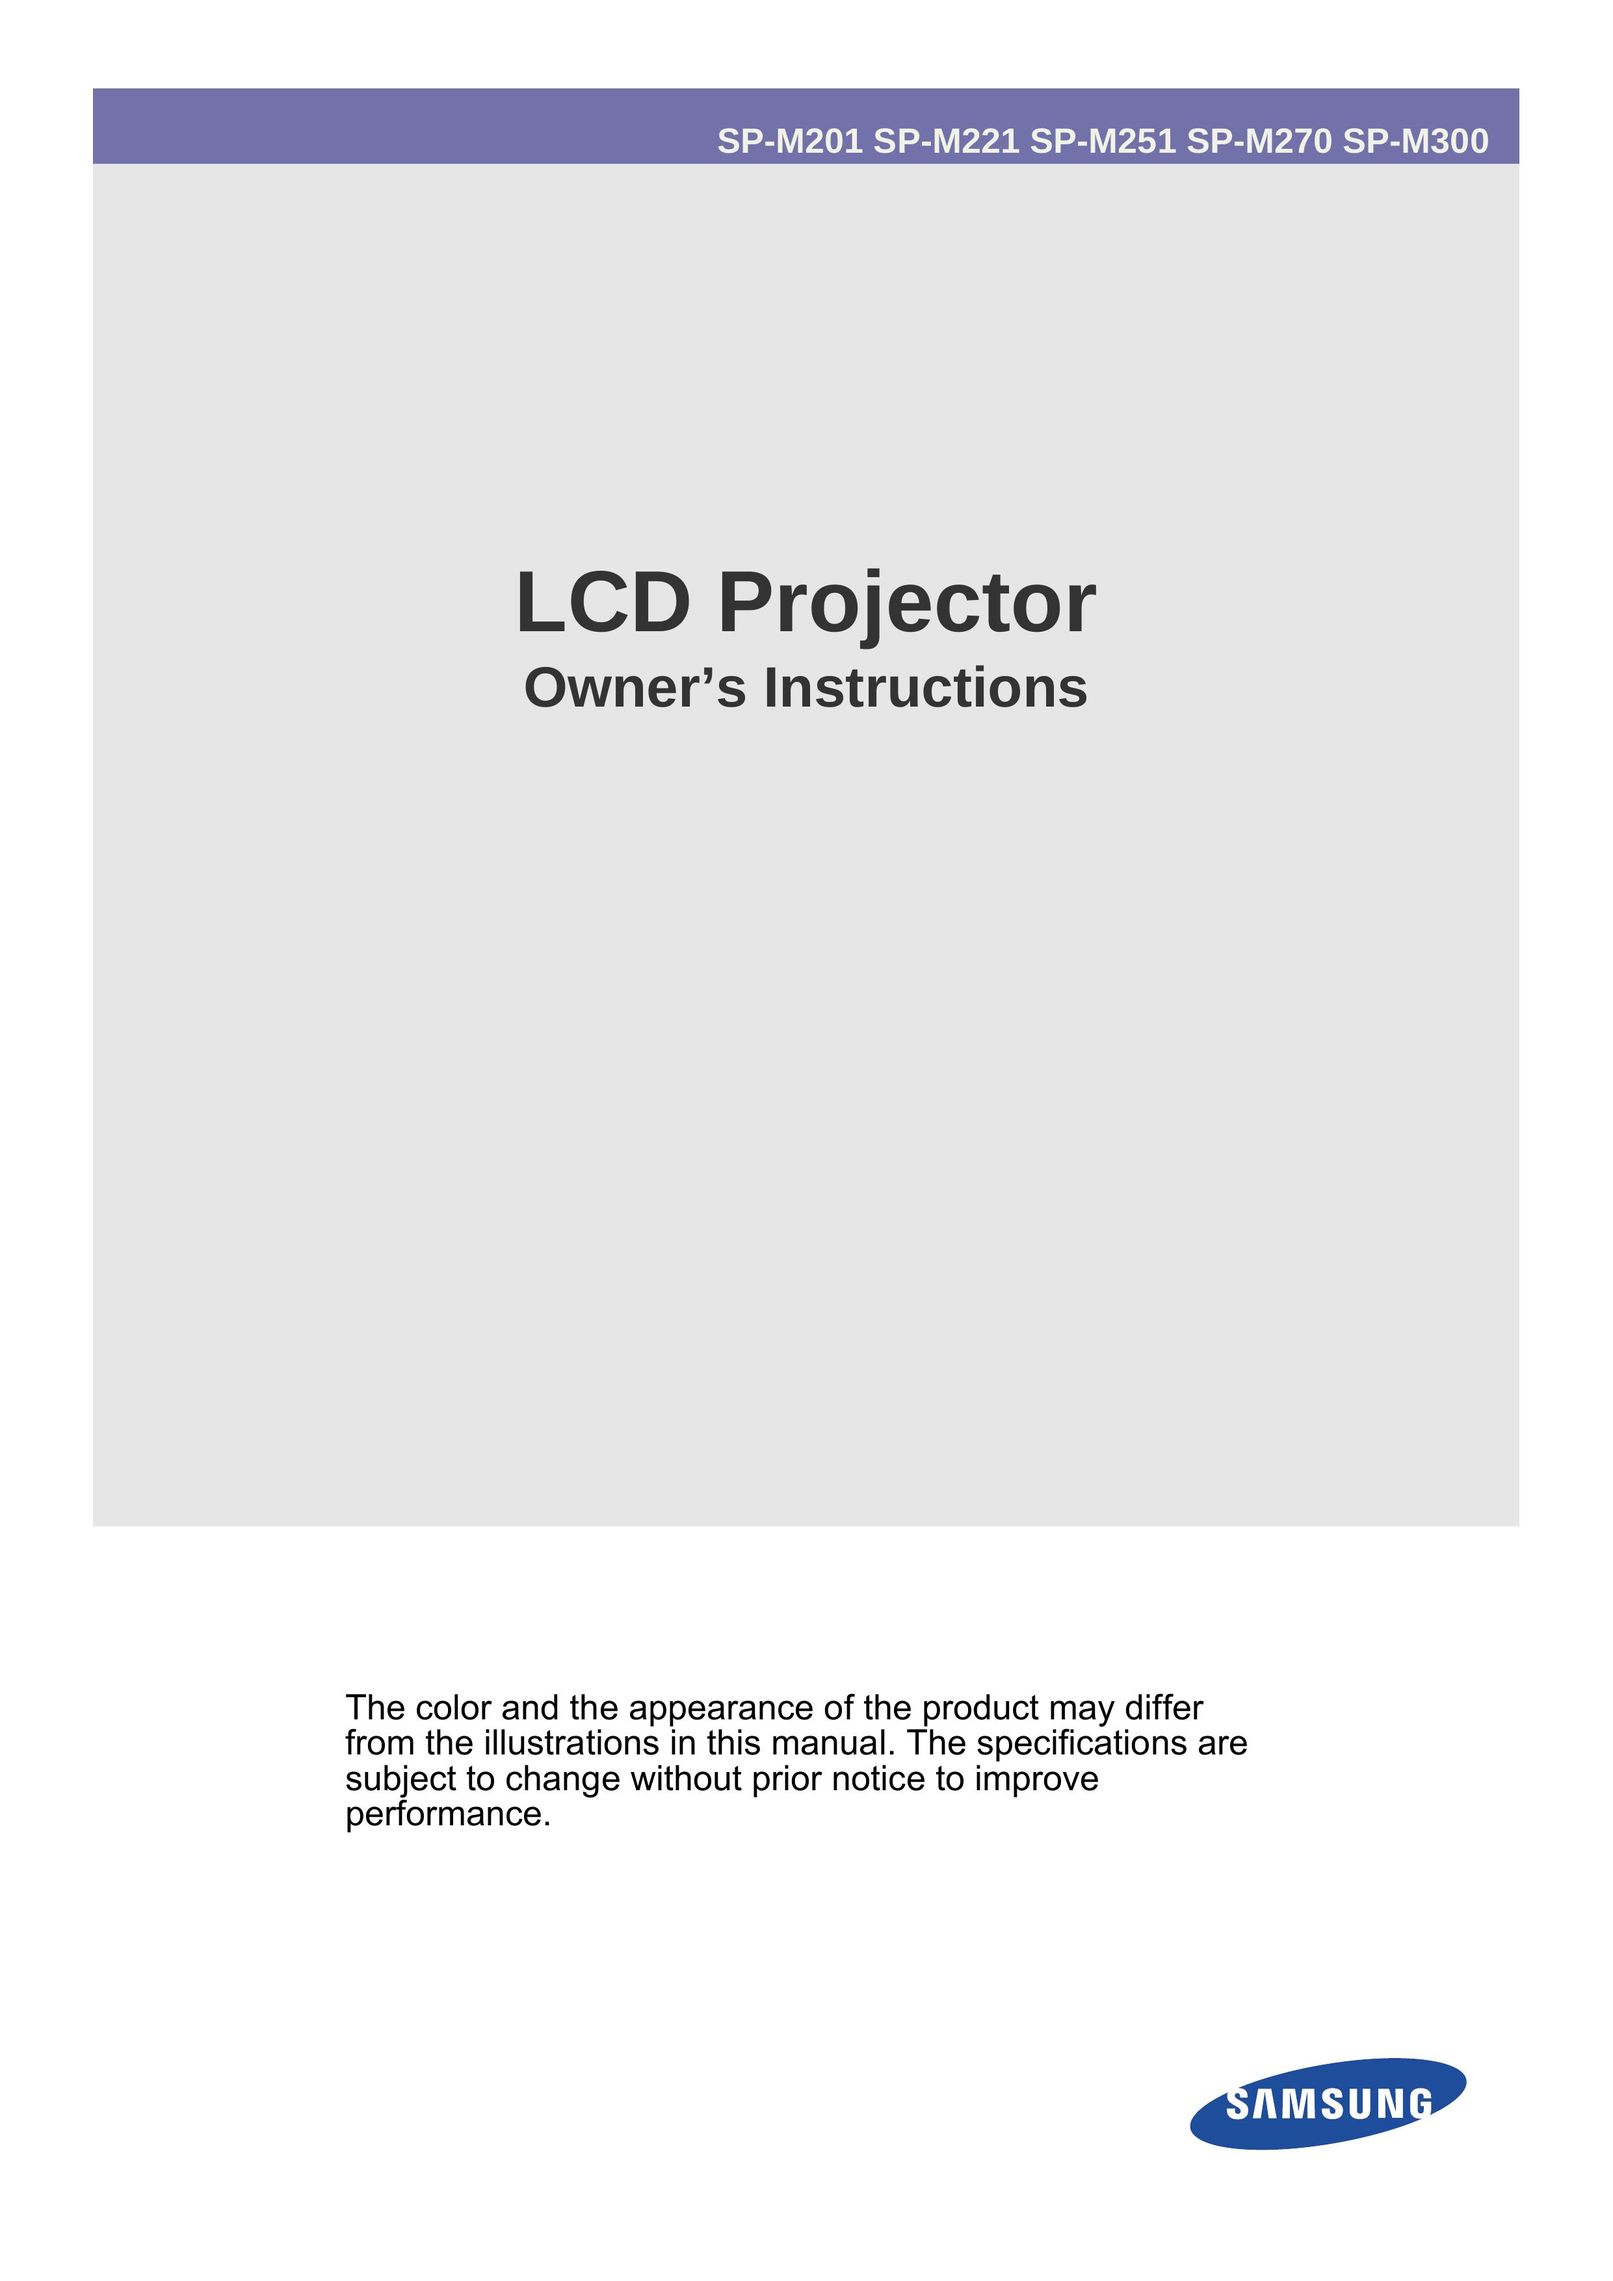 Samsung SP-M221 Projector User Manual